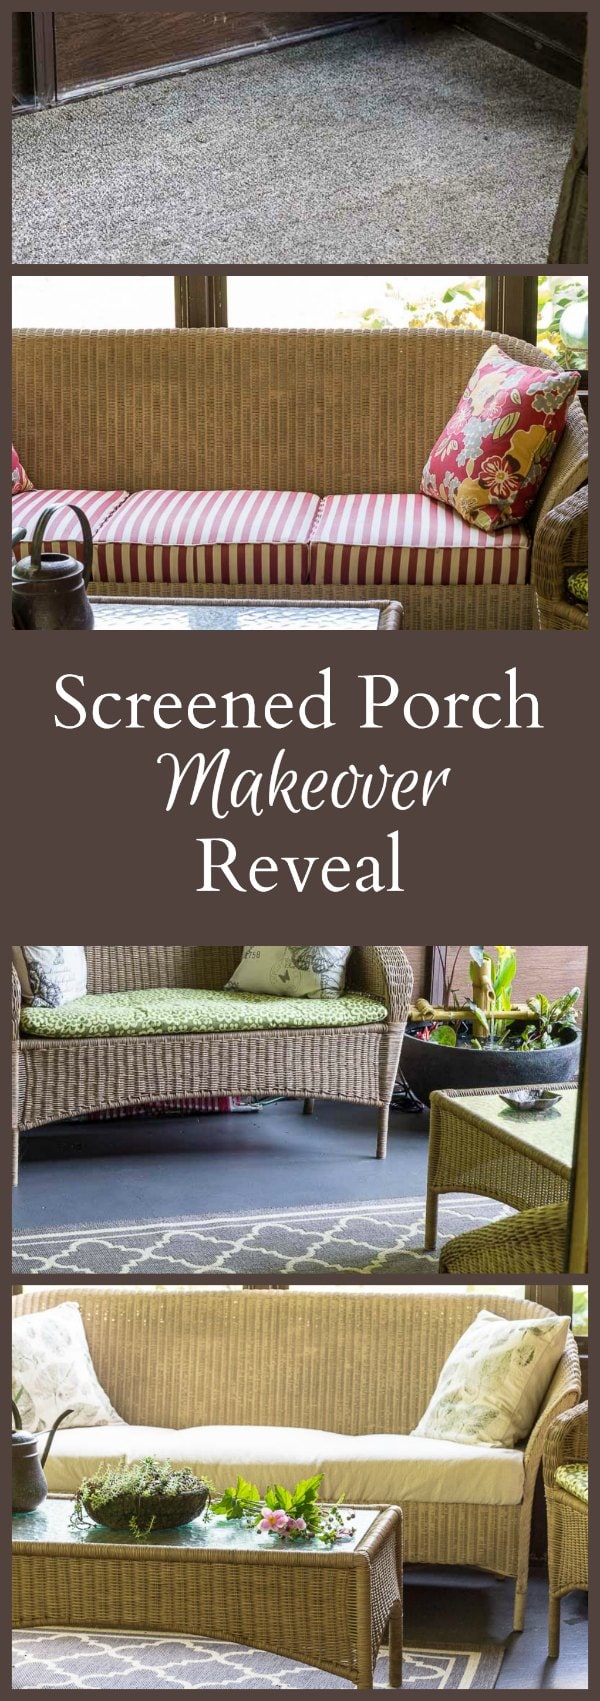 Screened Porch Makeover Reveal